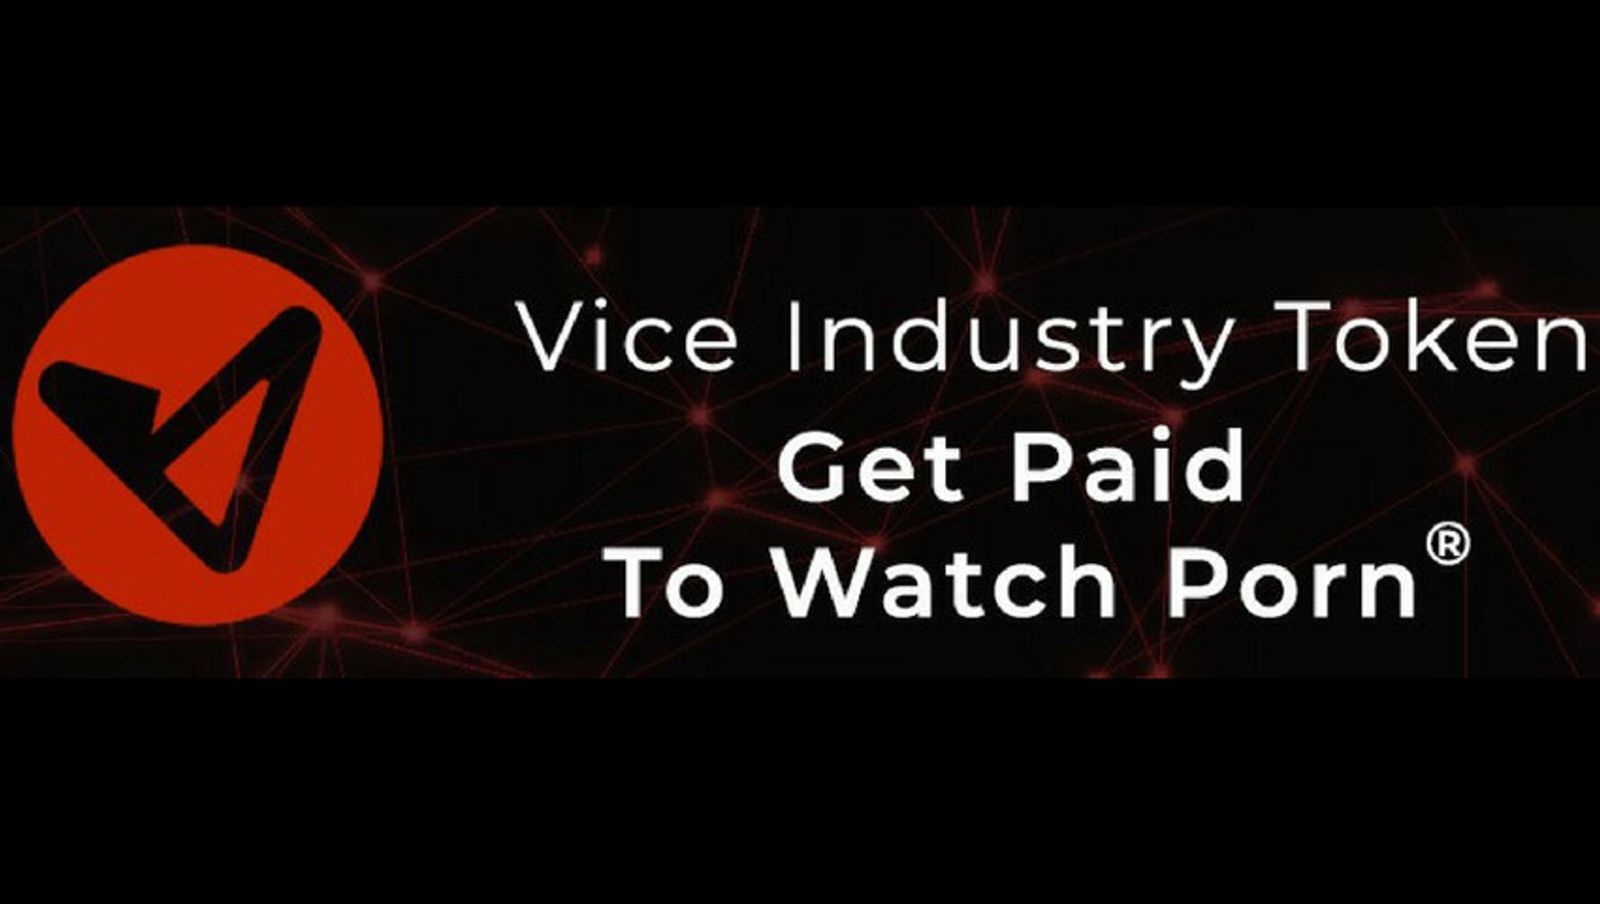 Vice Industry Token Announces Crowdsale